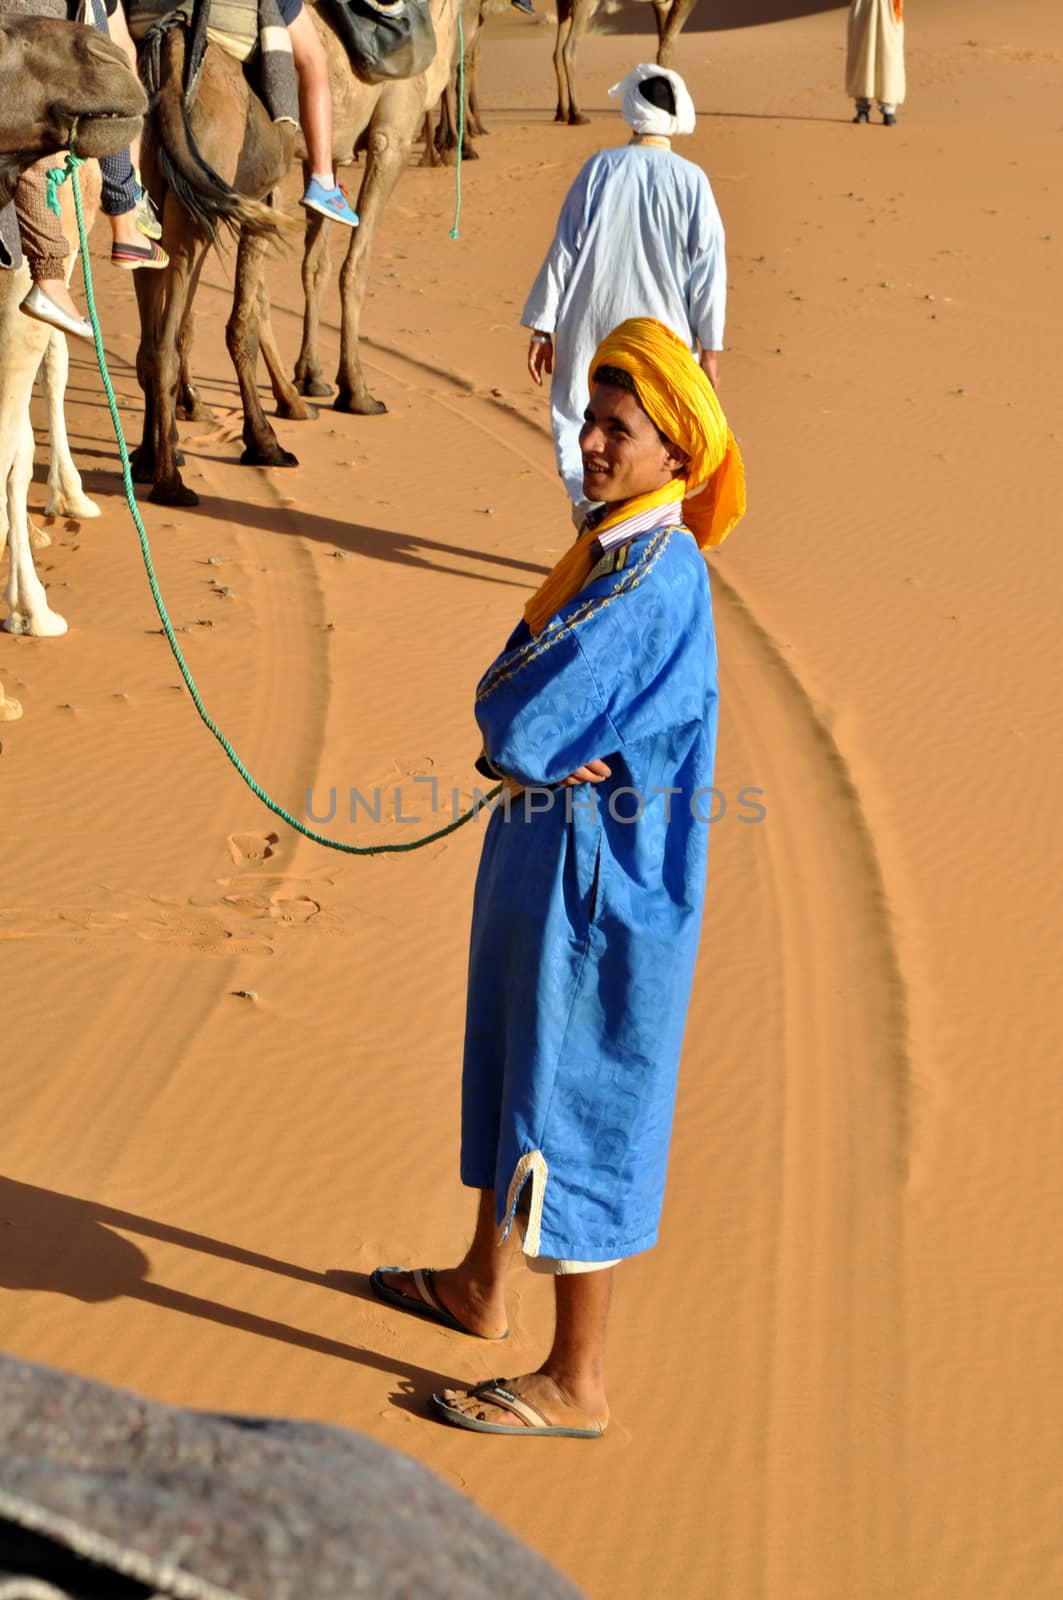 MERZOUGA DESERT - OCTOBER 01: Man in traditional Berber wear, walking in Merzouga Desert, Morocco on October 01, 2013.